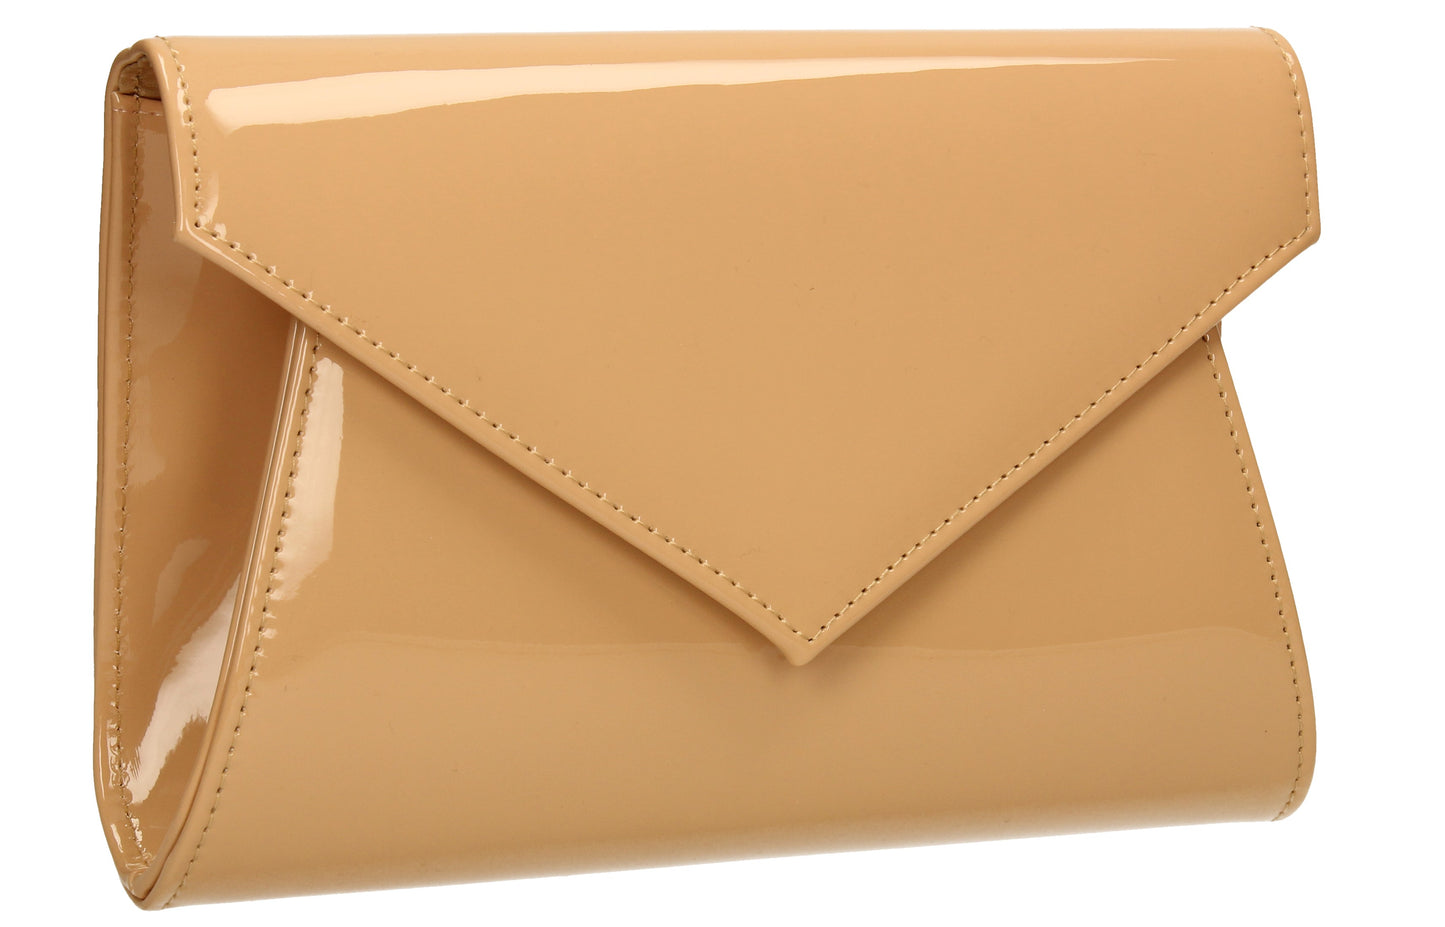 SWANKYSWANS Chrissy Envelope Clutch Bag Beige Cute Cheap Clutch Bag For Weddings School and Work